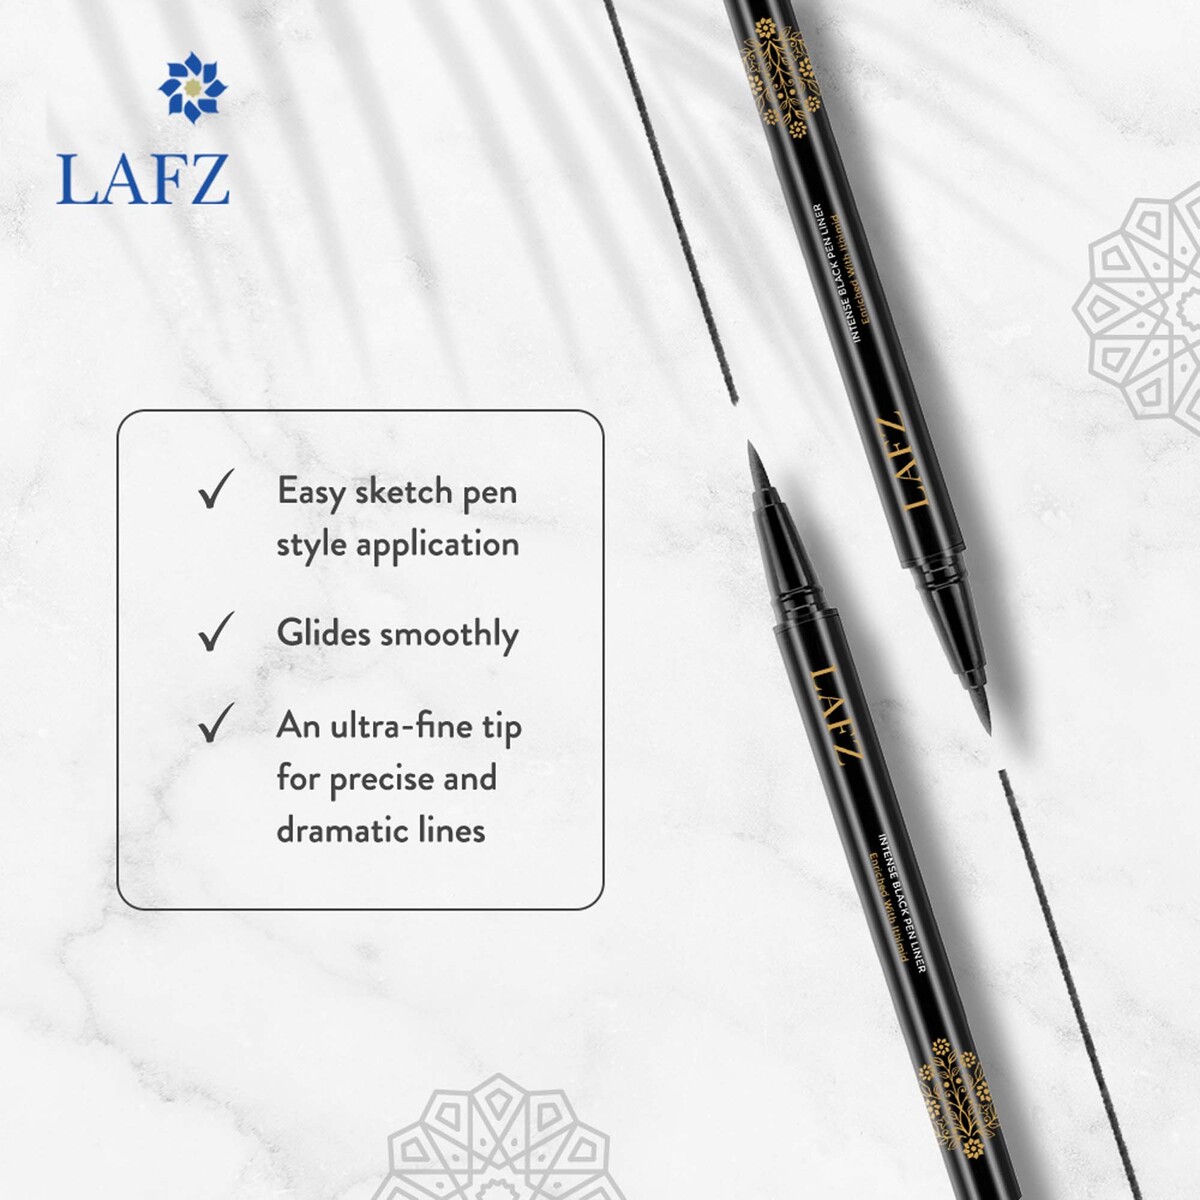 Lafz Waterproof Intense Black Pen Eye Liner, Black, 1.5 ml